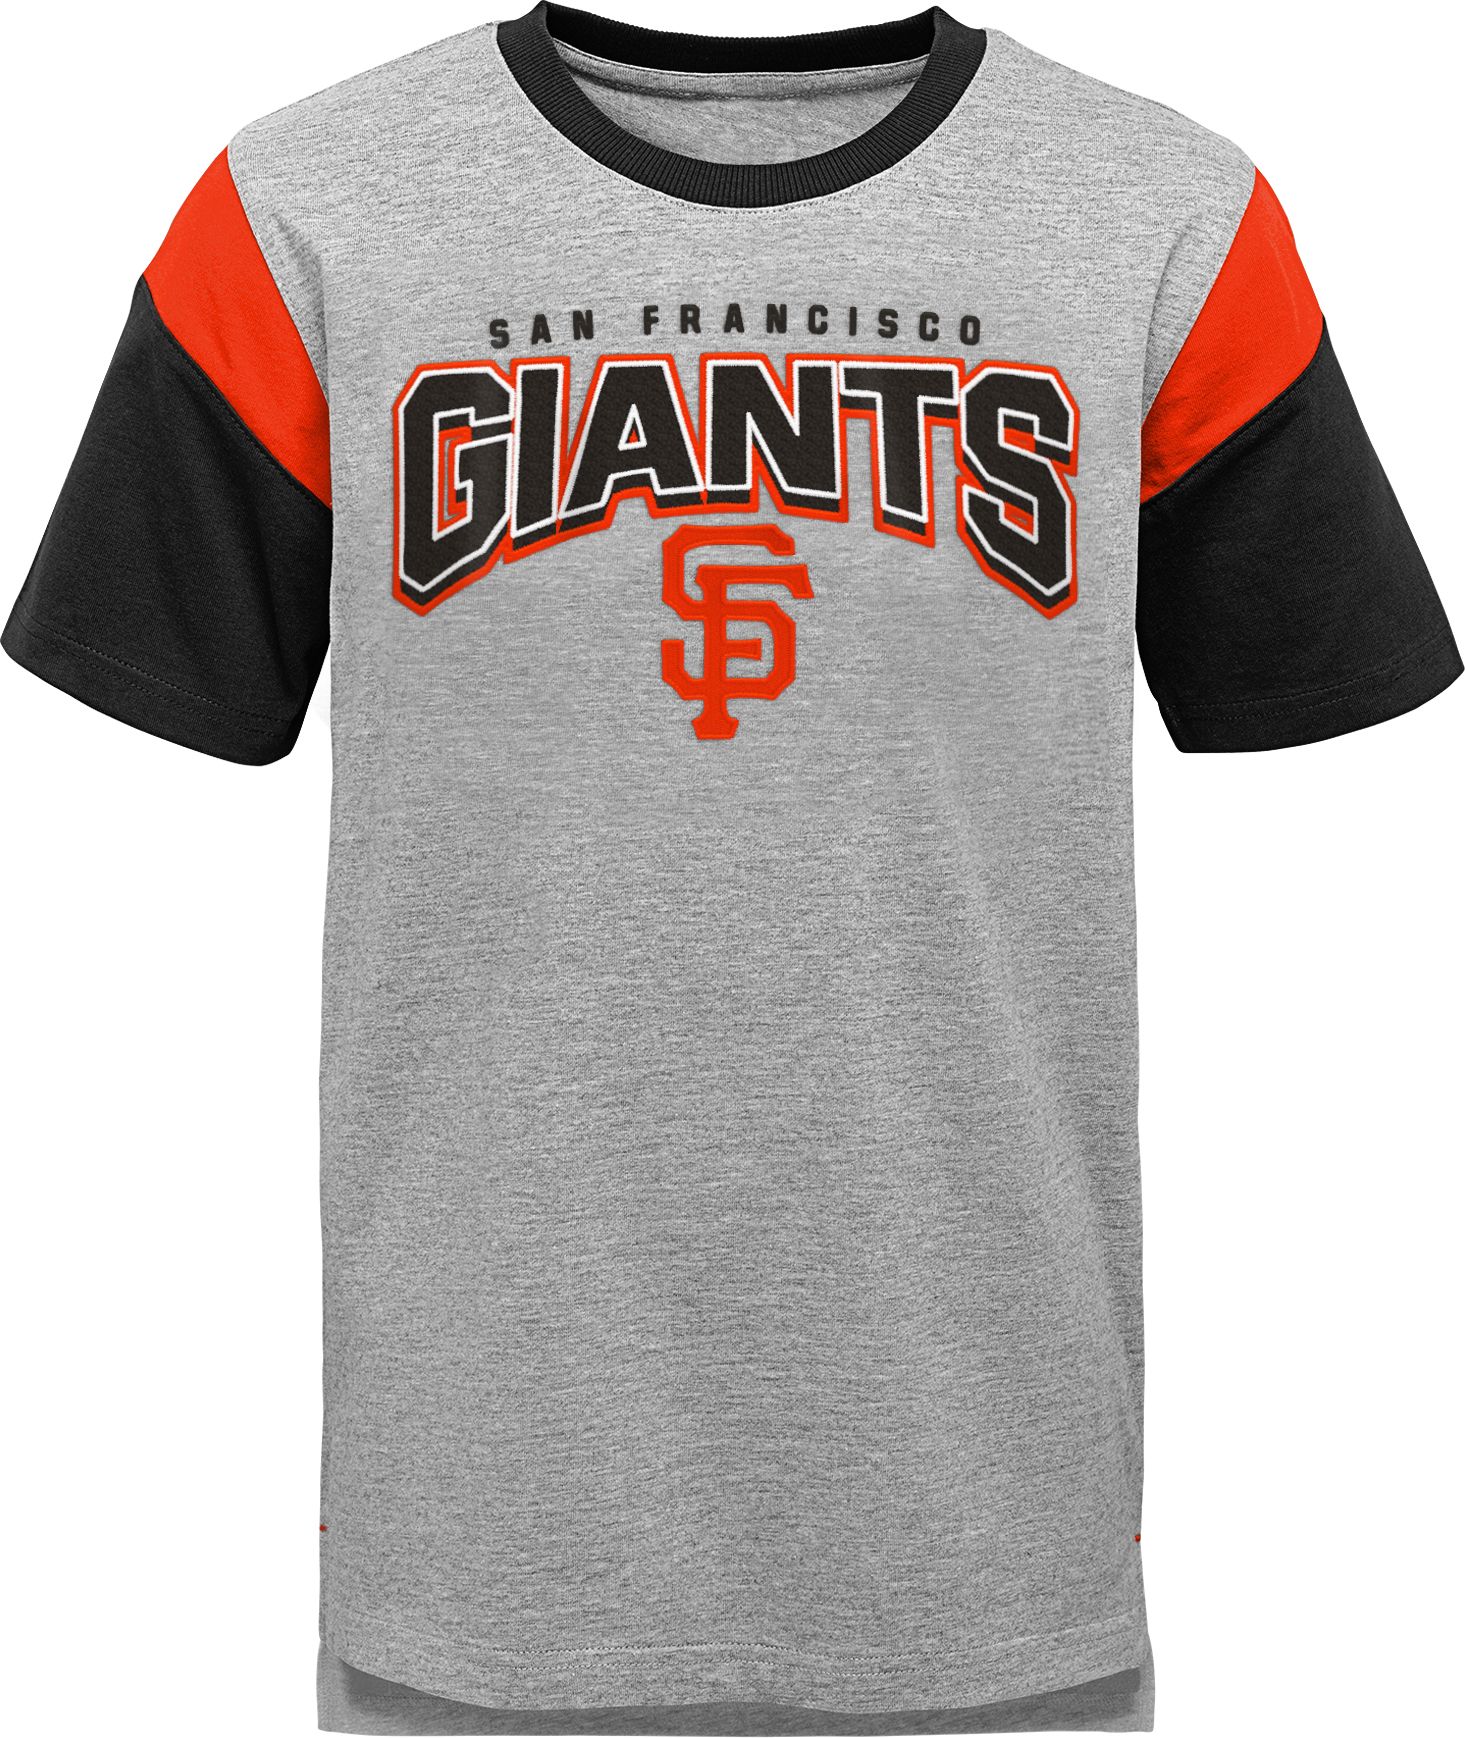 New Era Giants Third Down Colorblock T-Shirt